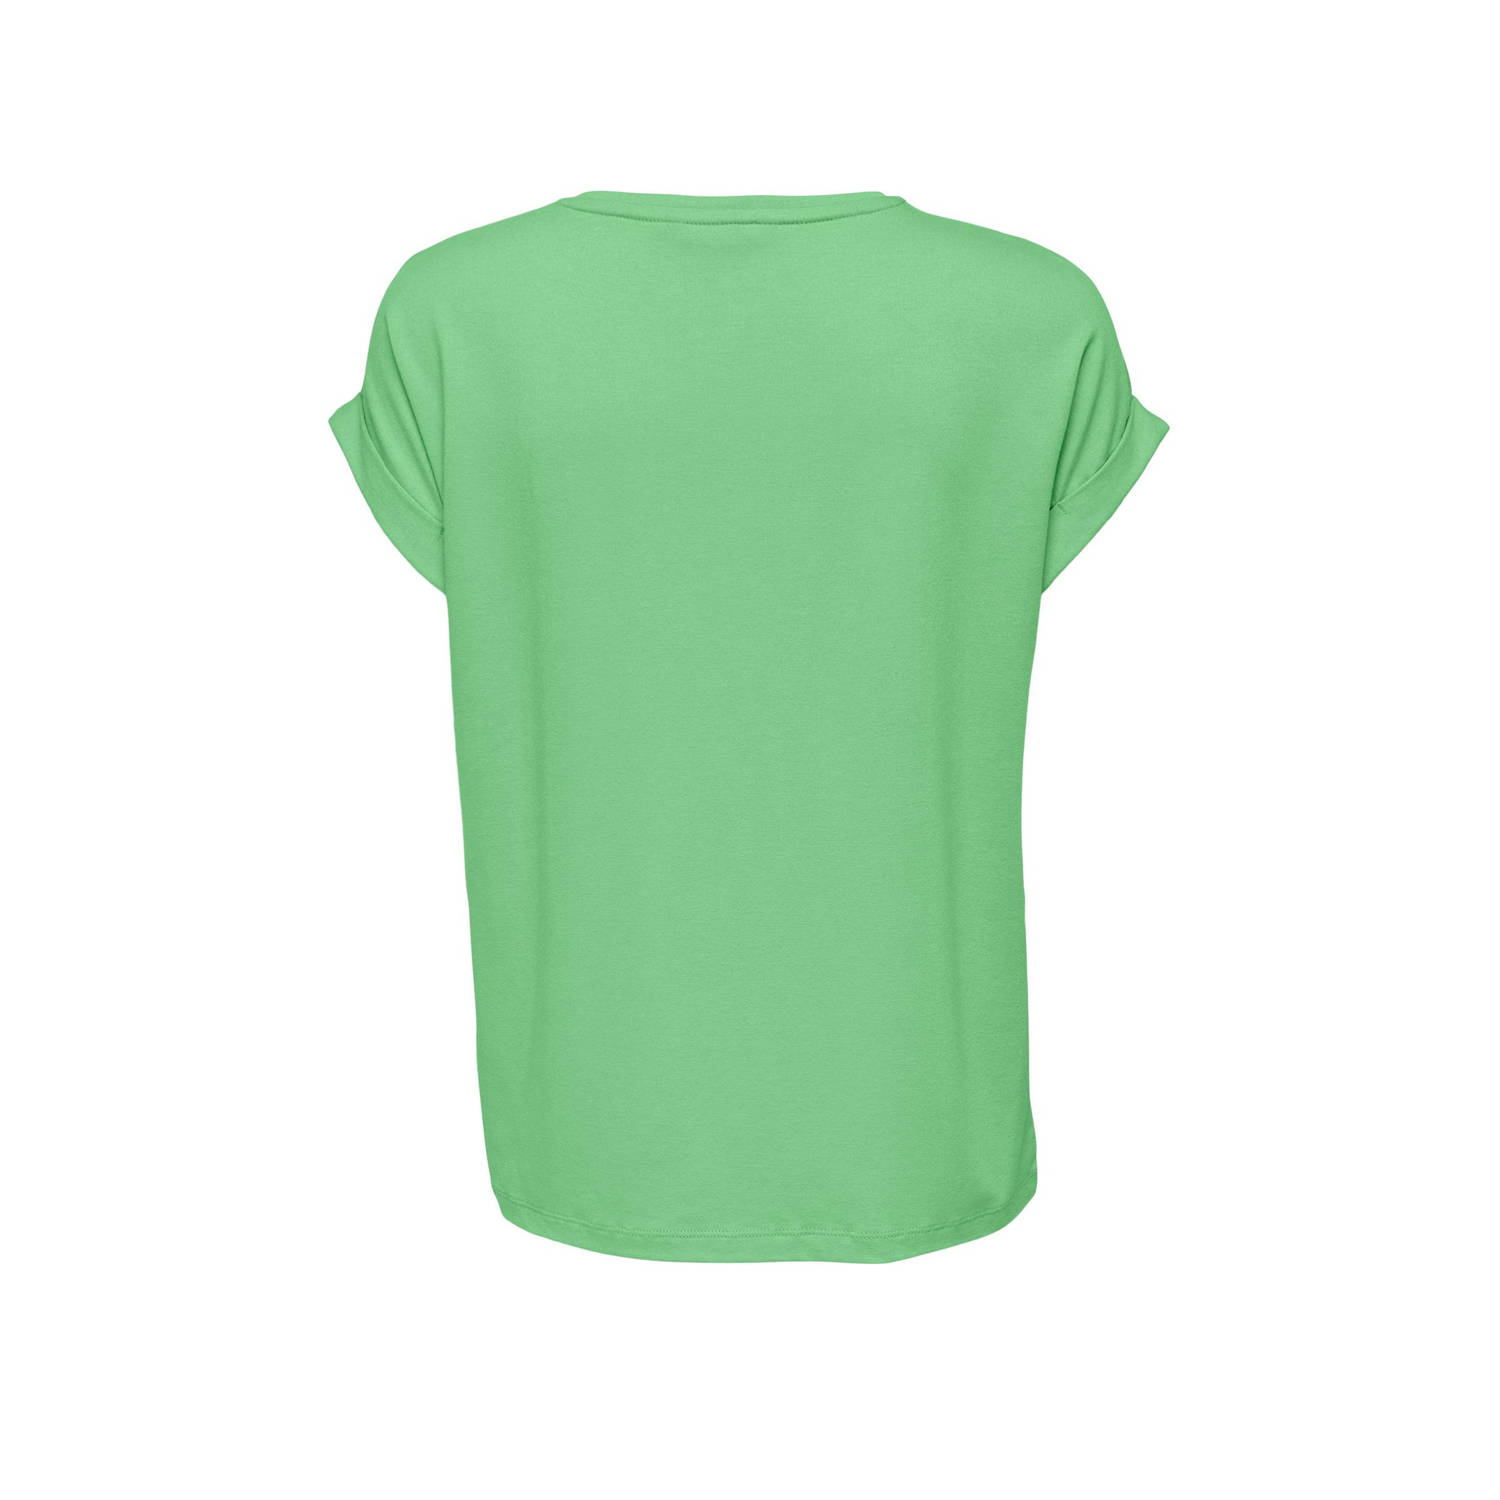 ONLY T-shirt ONLMONSTER groen